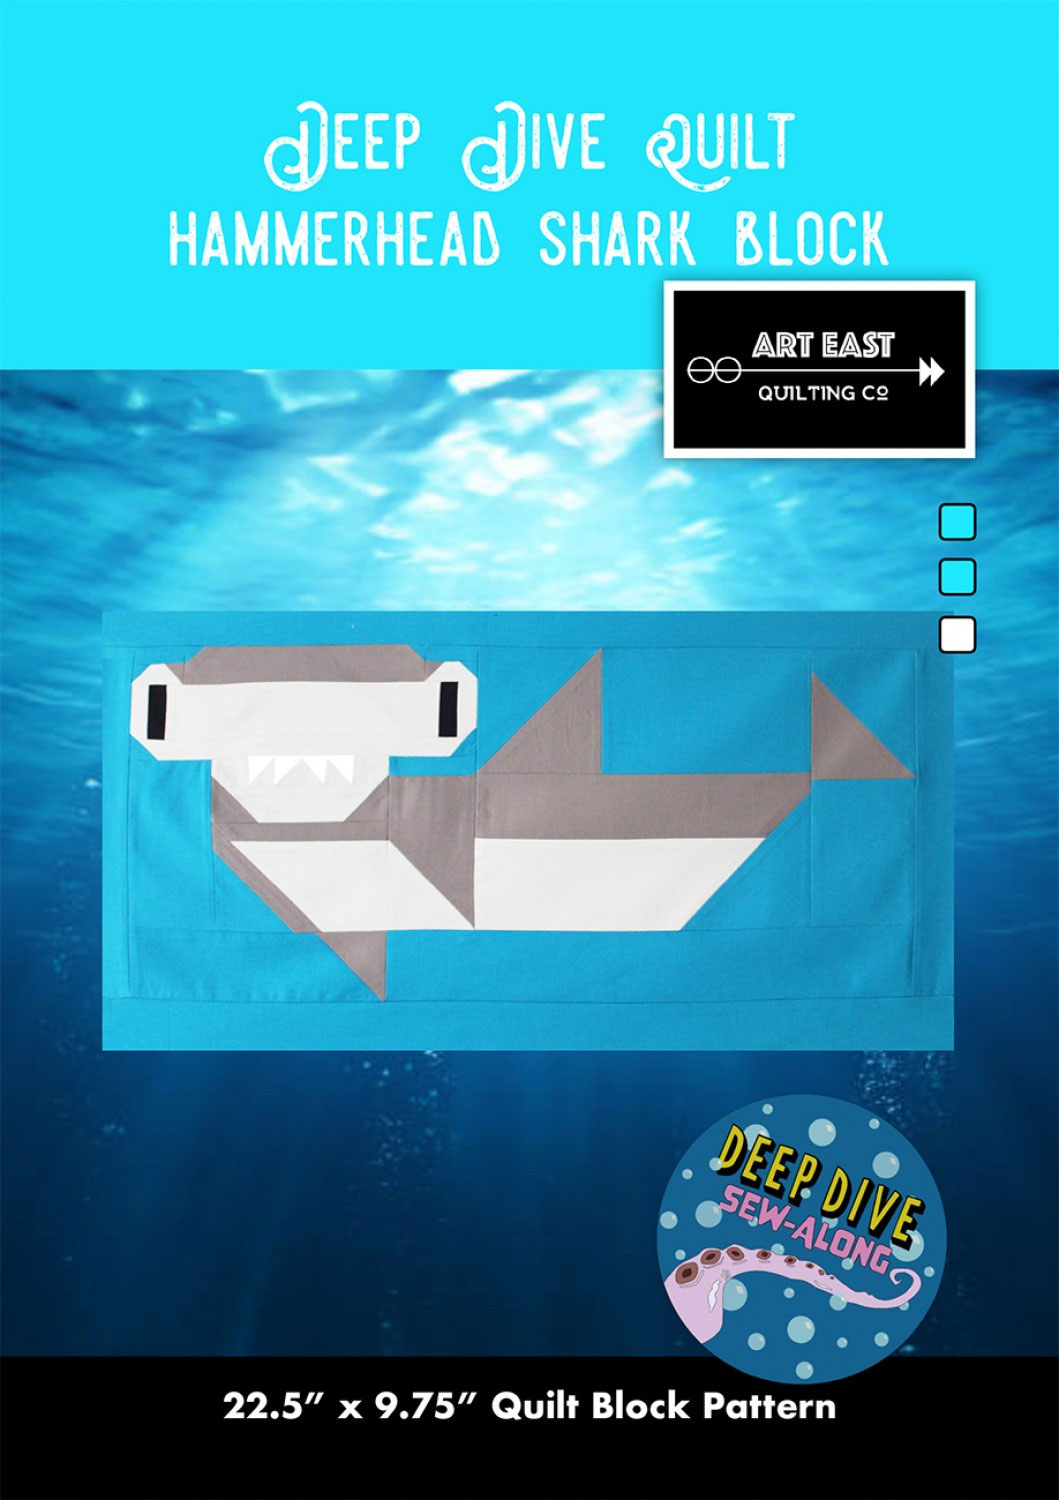 Hammerhead-Shark-Block-sewing-pattern-Art-East-Quilting-Co-front